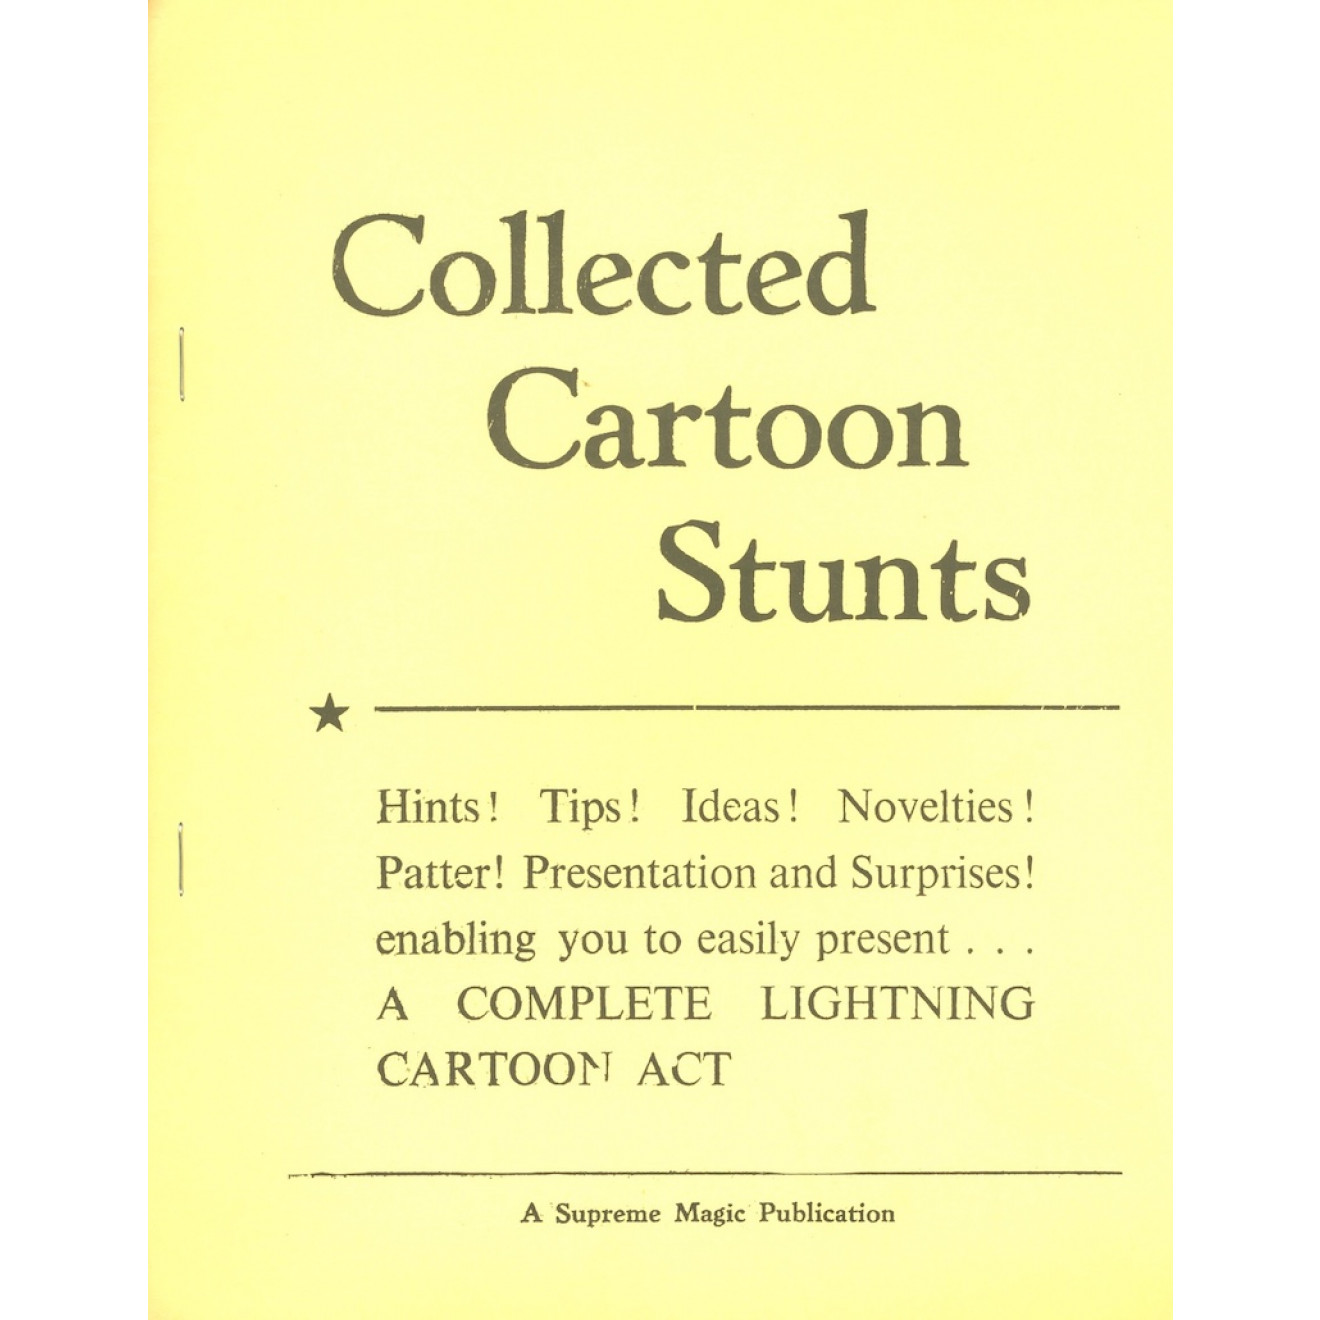 Collected Cartoon Stunts